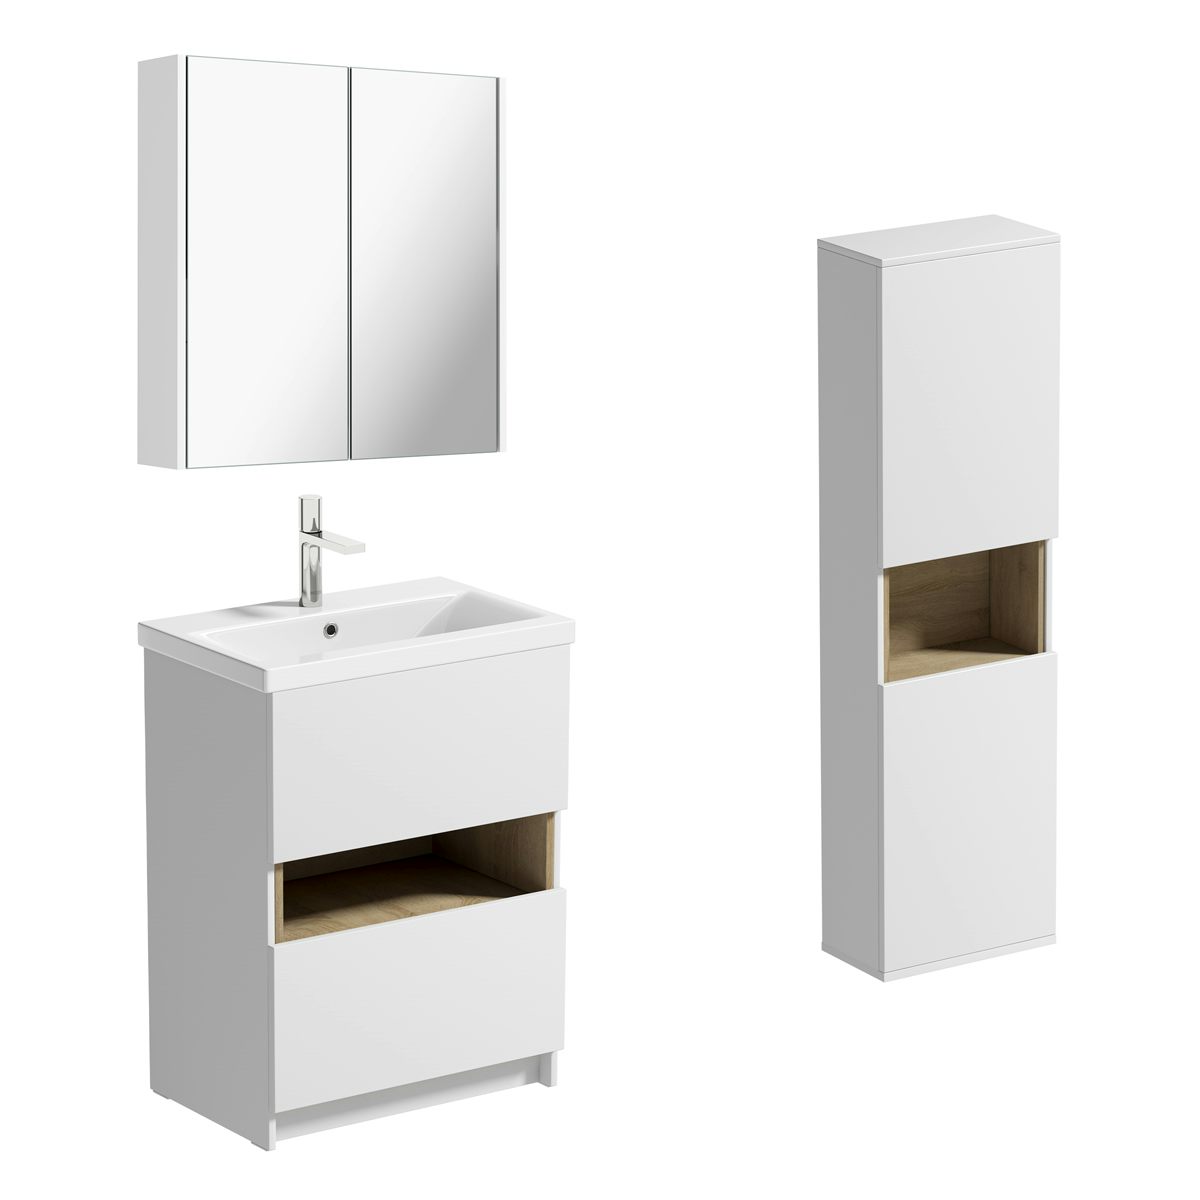 Mode Tate II white & oak furniture package with floorstanding vanity unit 600mm